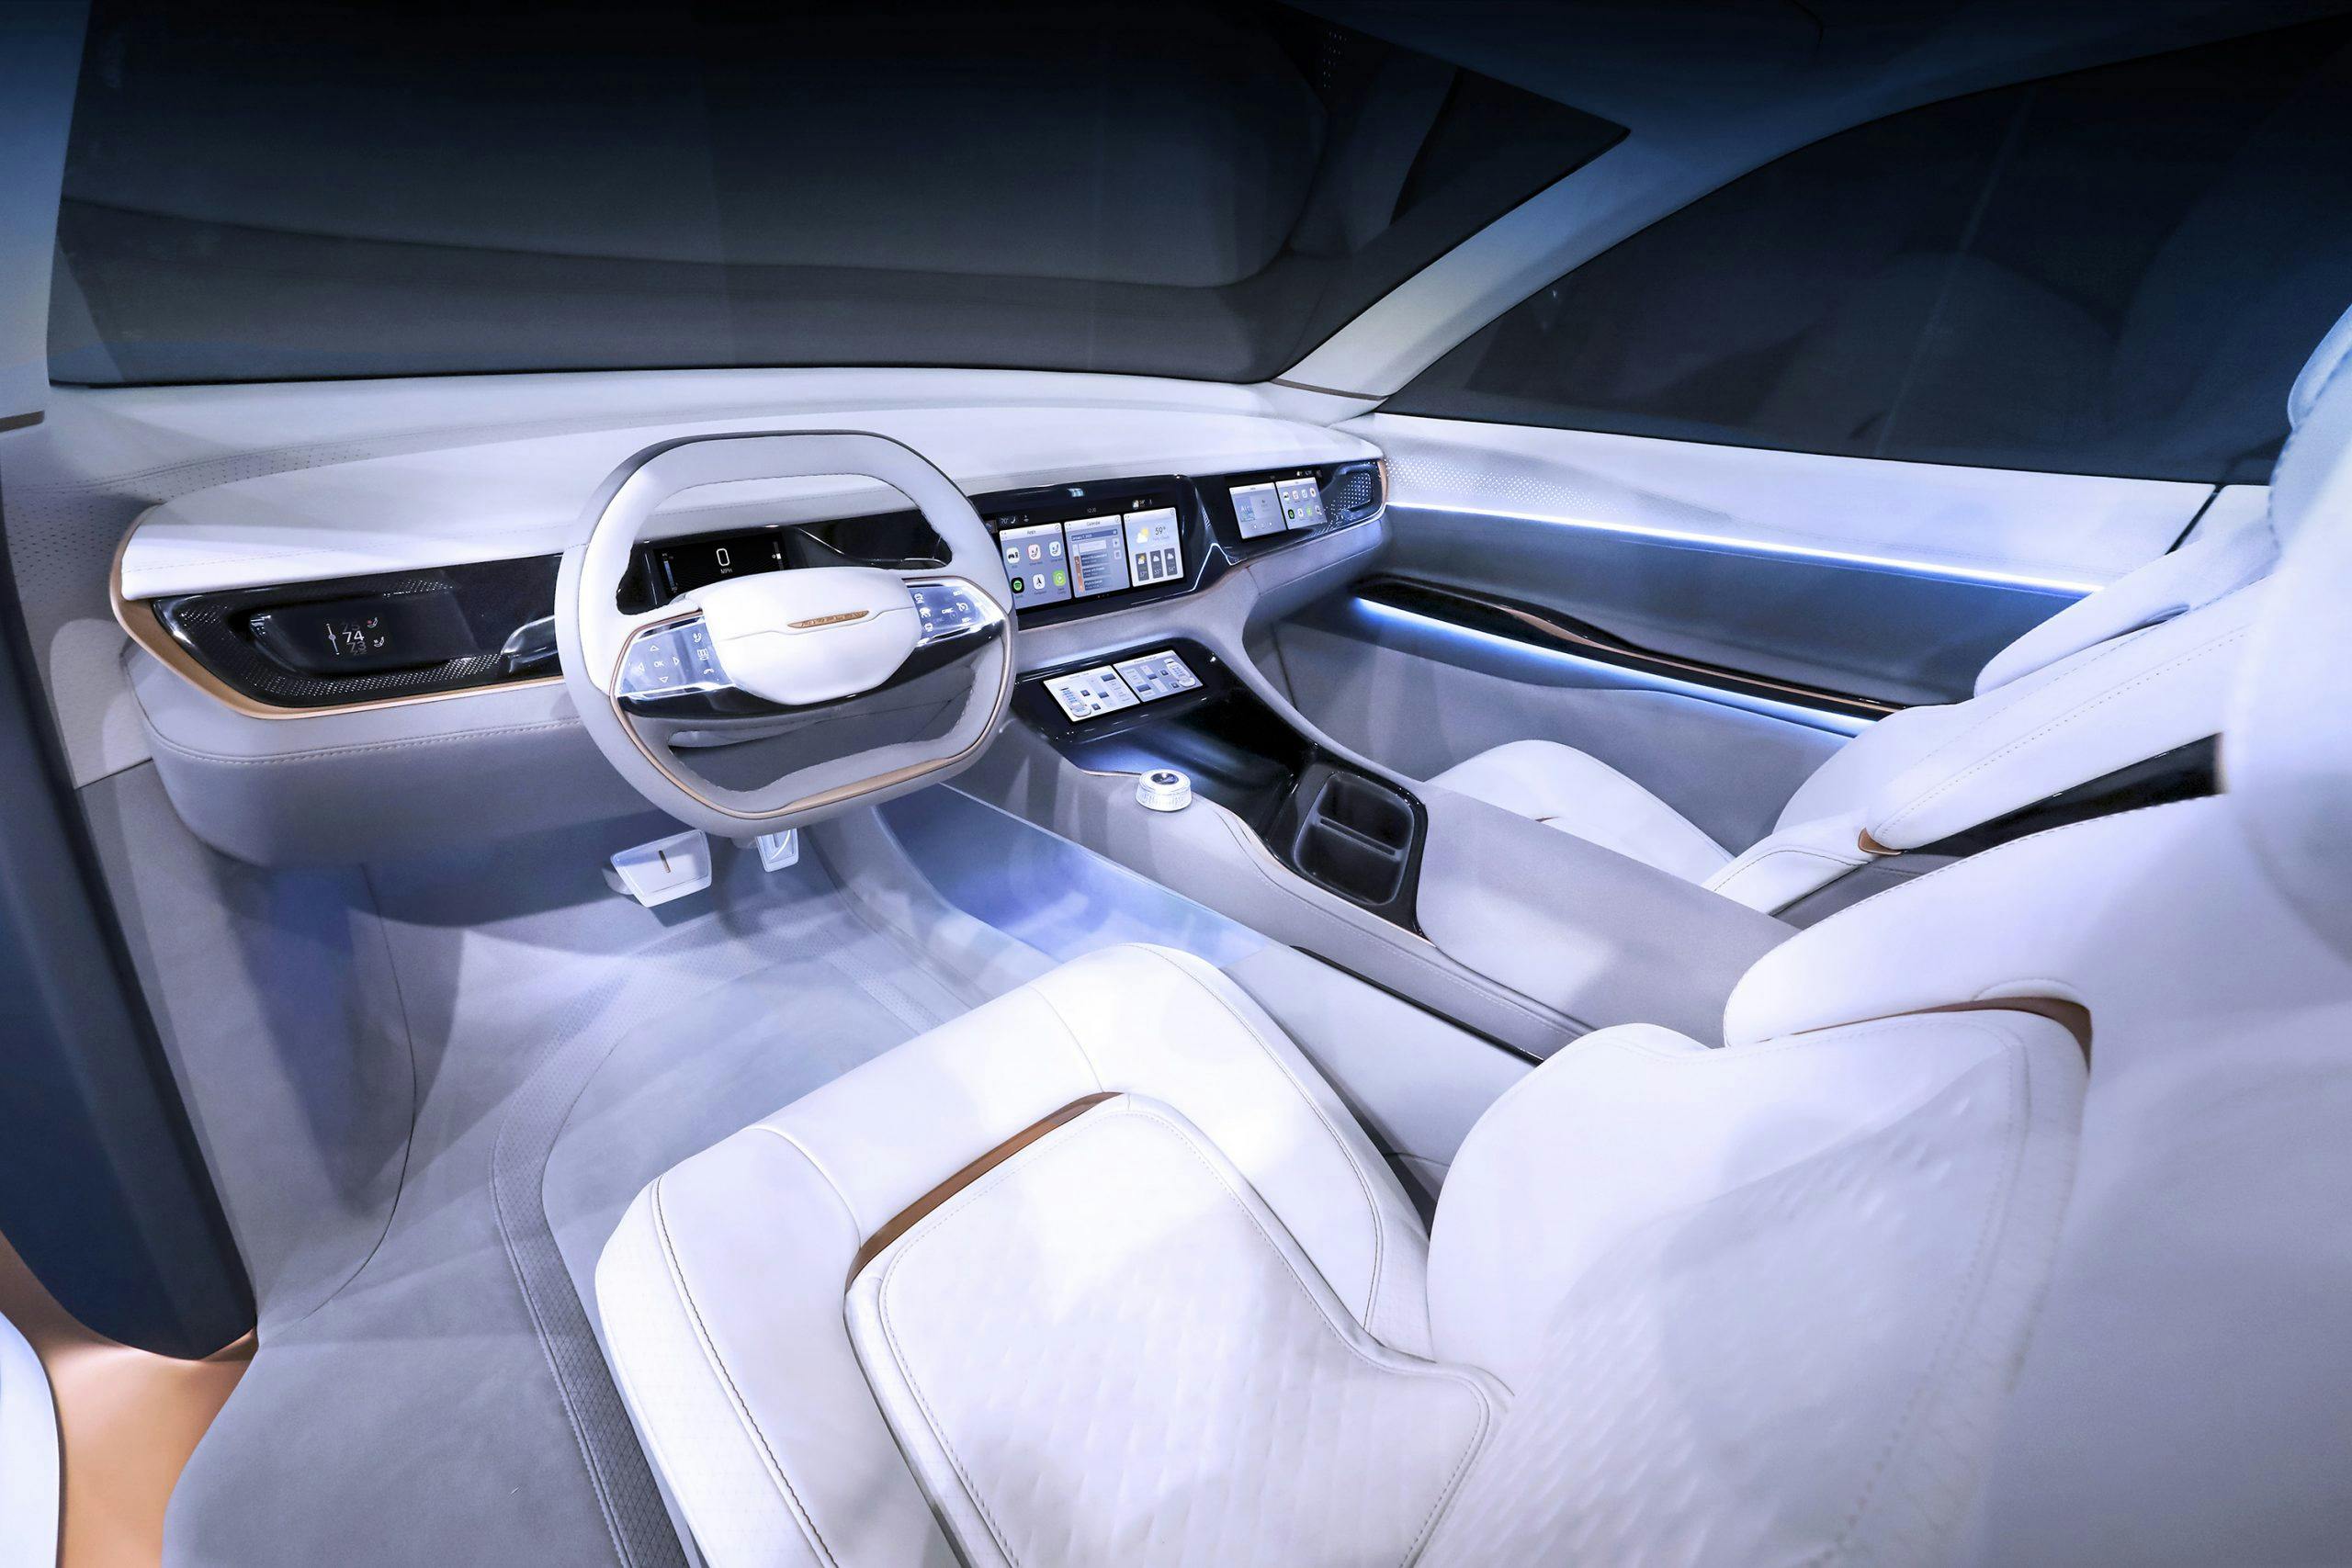 2020 Airflow Vision interior dash screen